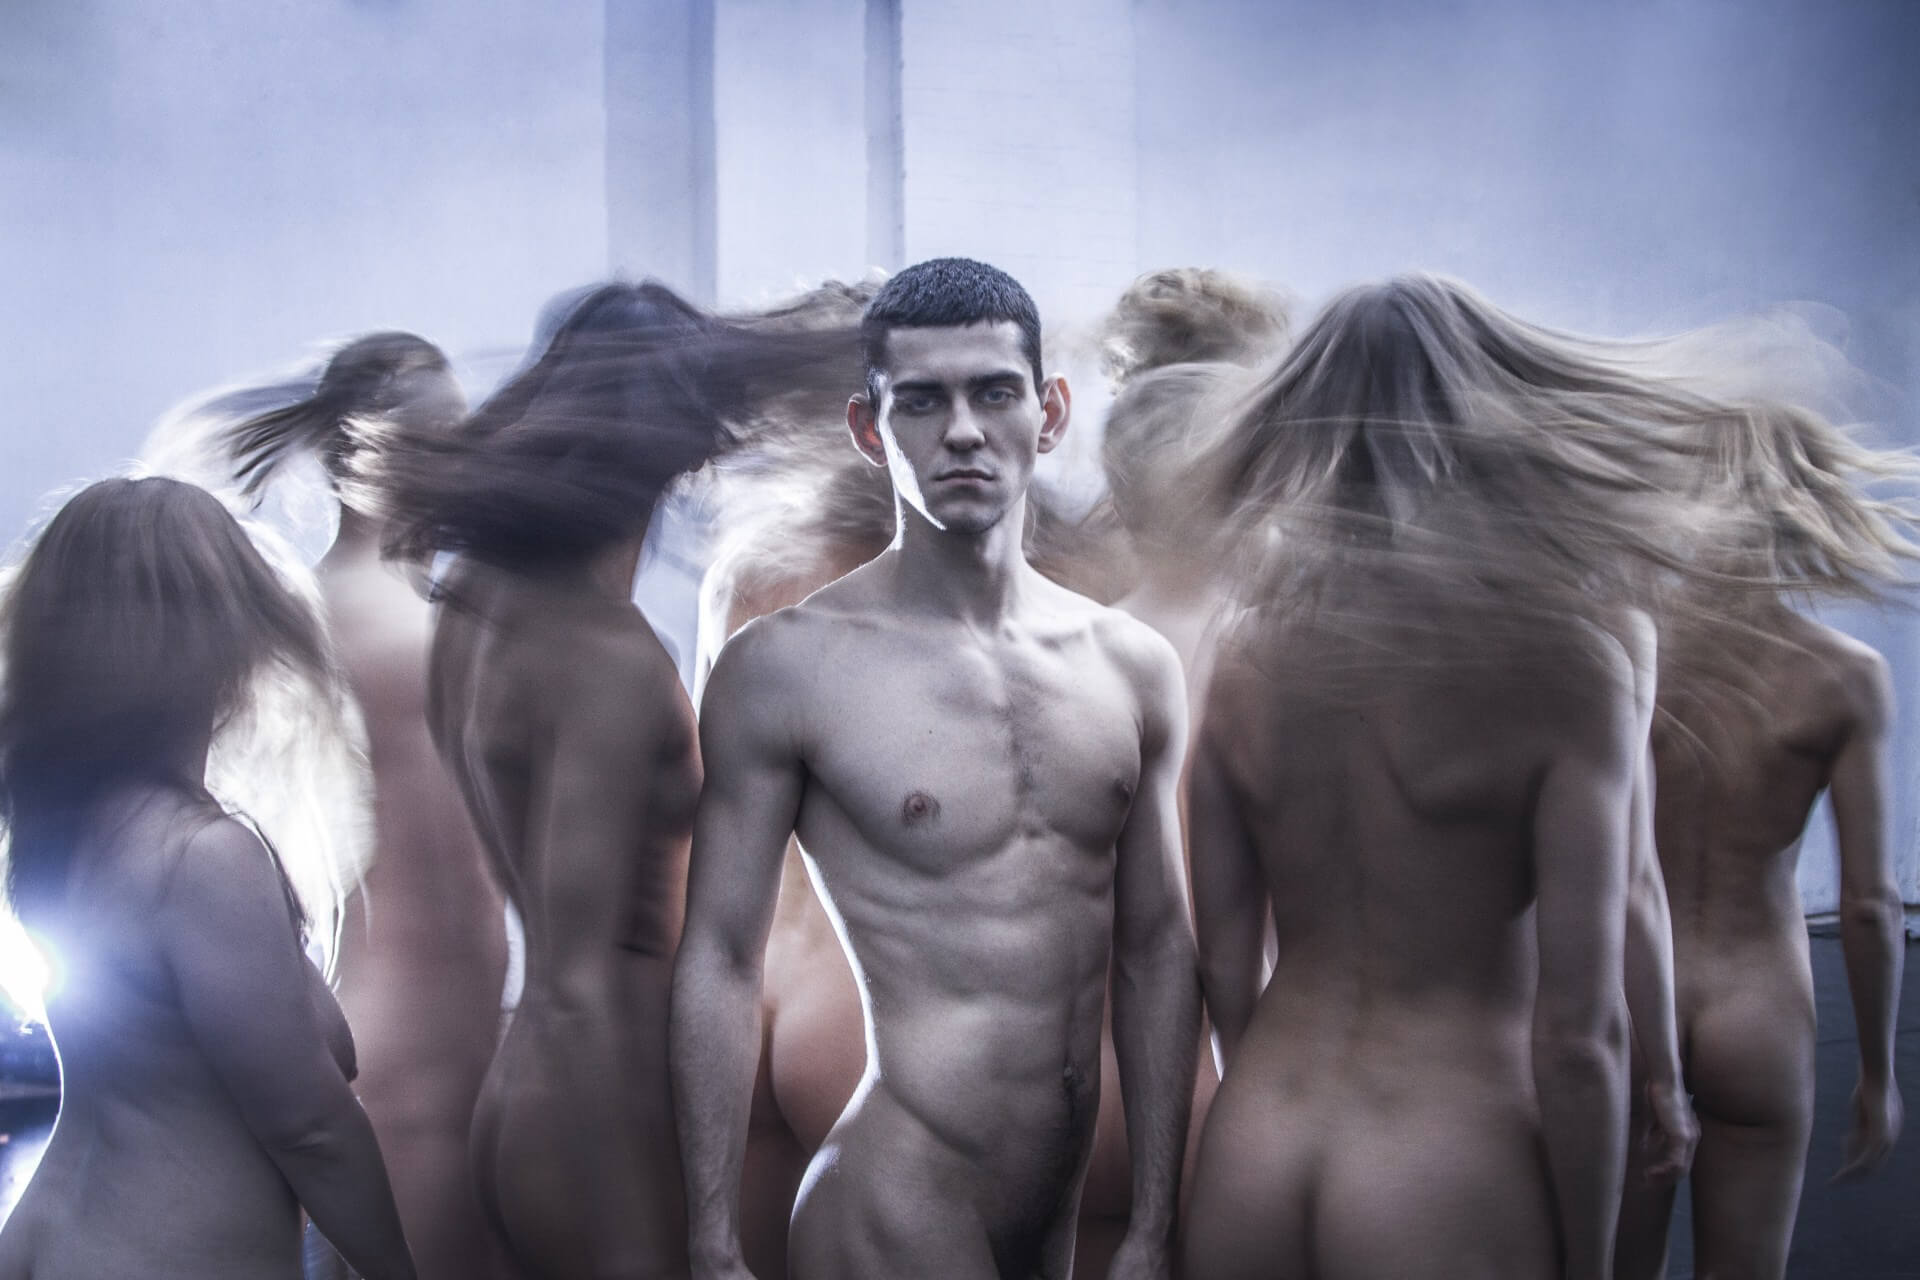 реклама сумок голыми мужиками фото 97